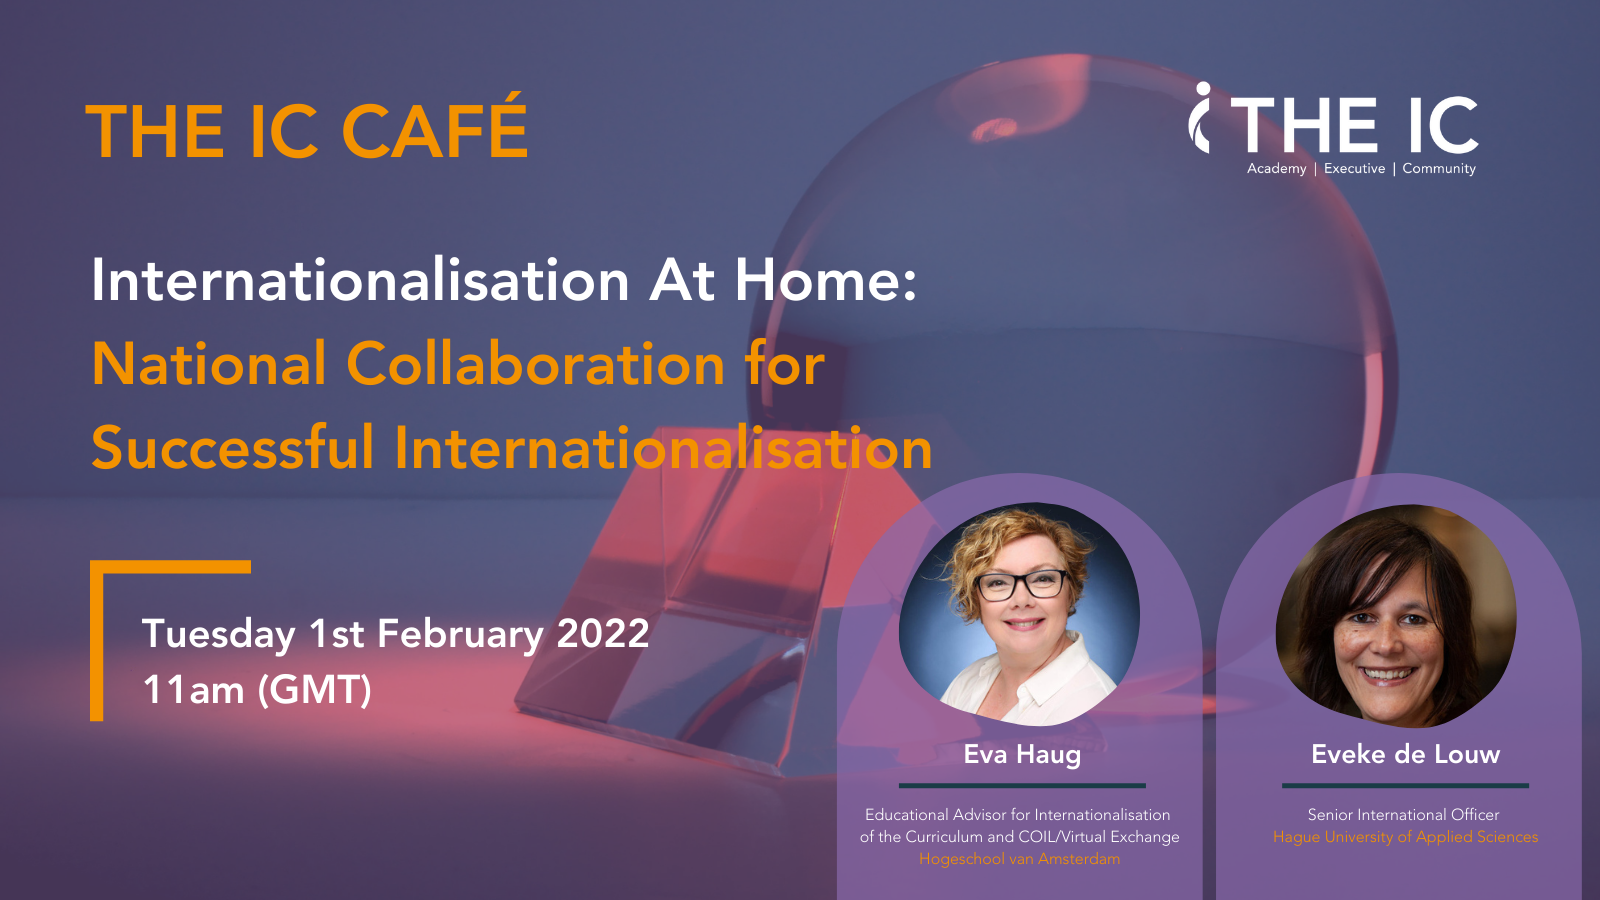 Internationalisation At Home: National Collaboration for Successful Internationalisation.